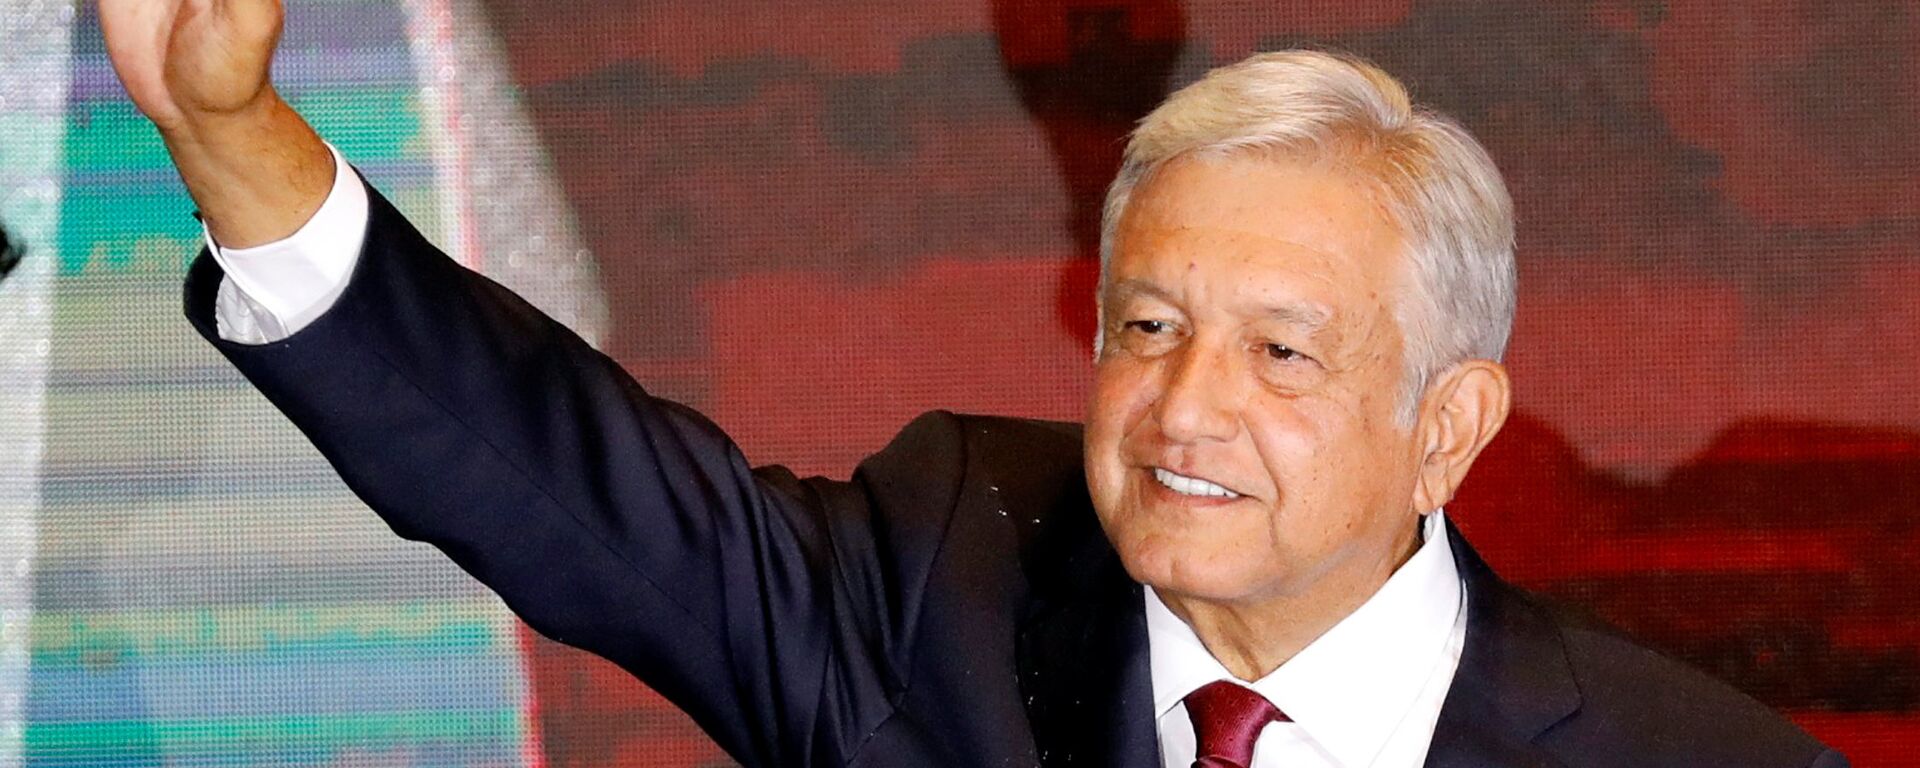 Andrés Manuel López Obrador, presidente electo de México - Sputnik Mundo, 1920, 02.07.2018